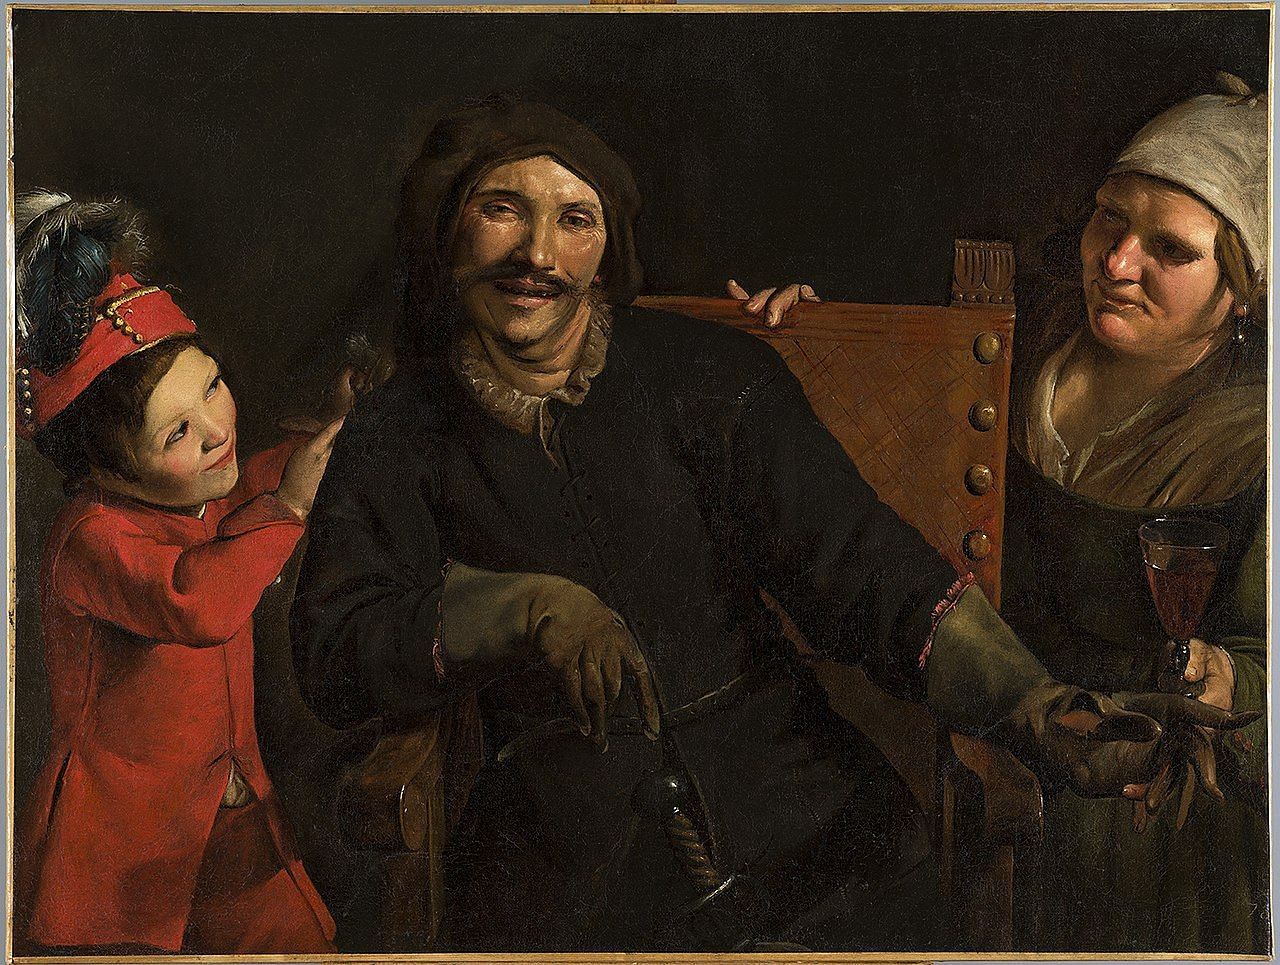 A painting of Tiberio Fiorilli, dressed as Scaramouche (Image via Pietro Paolini)